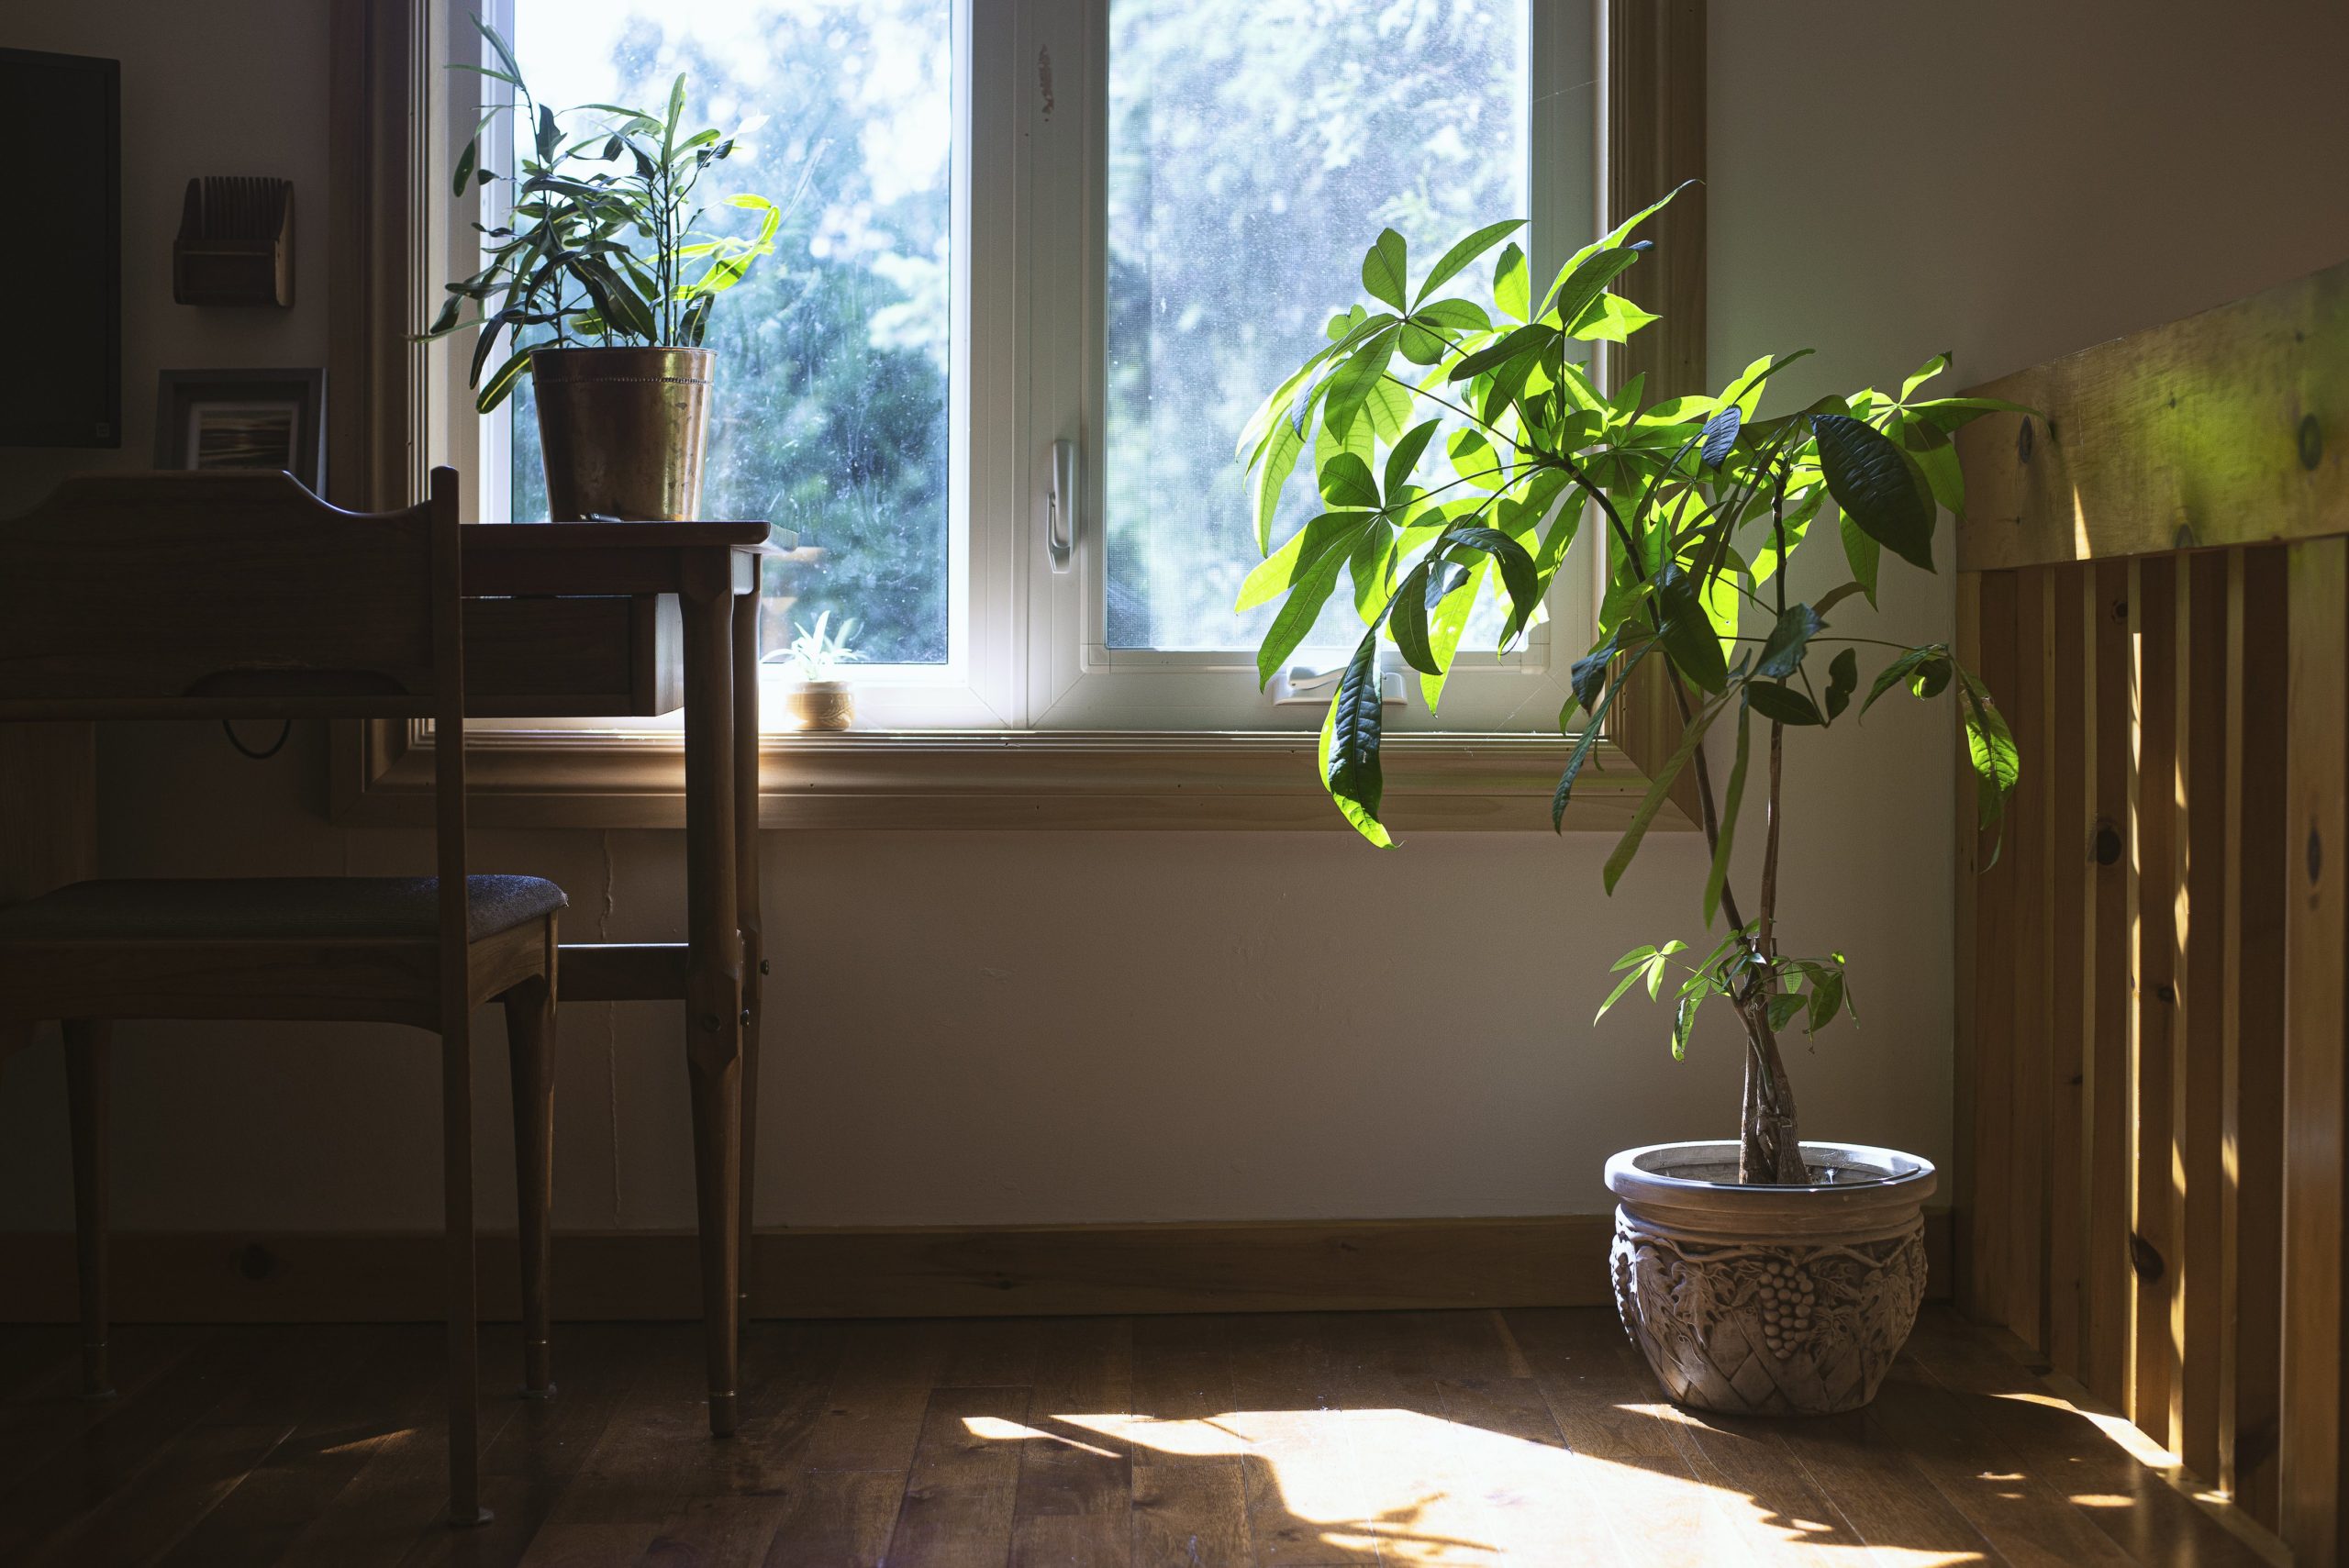 house-plant-enjoys-natural-light